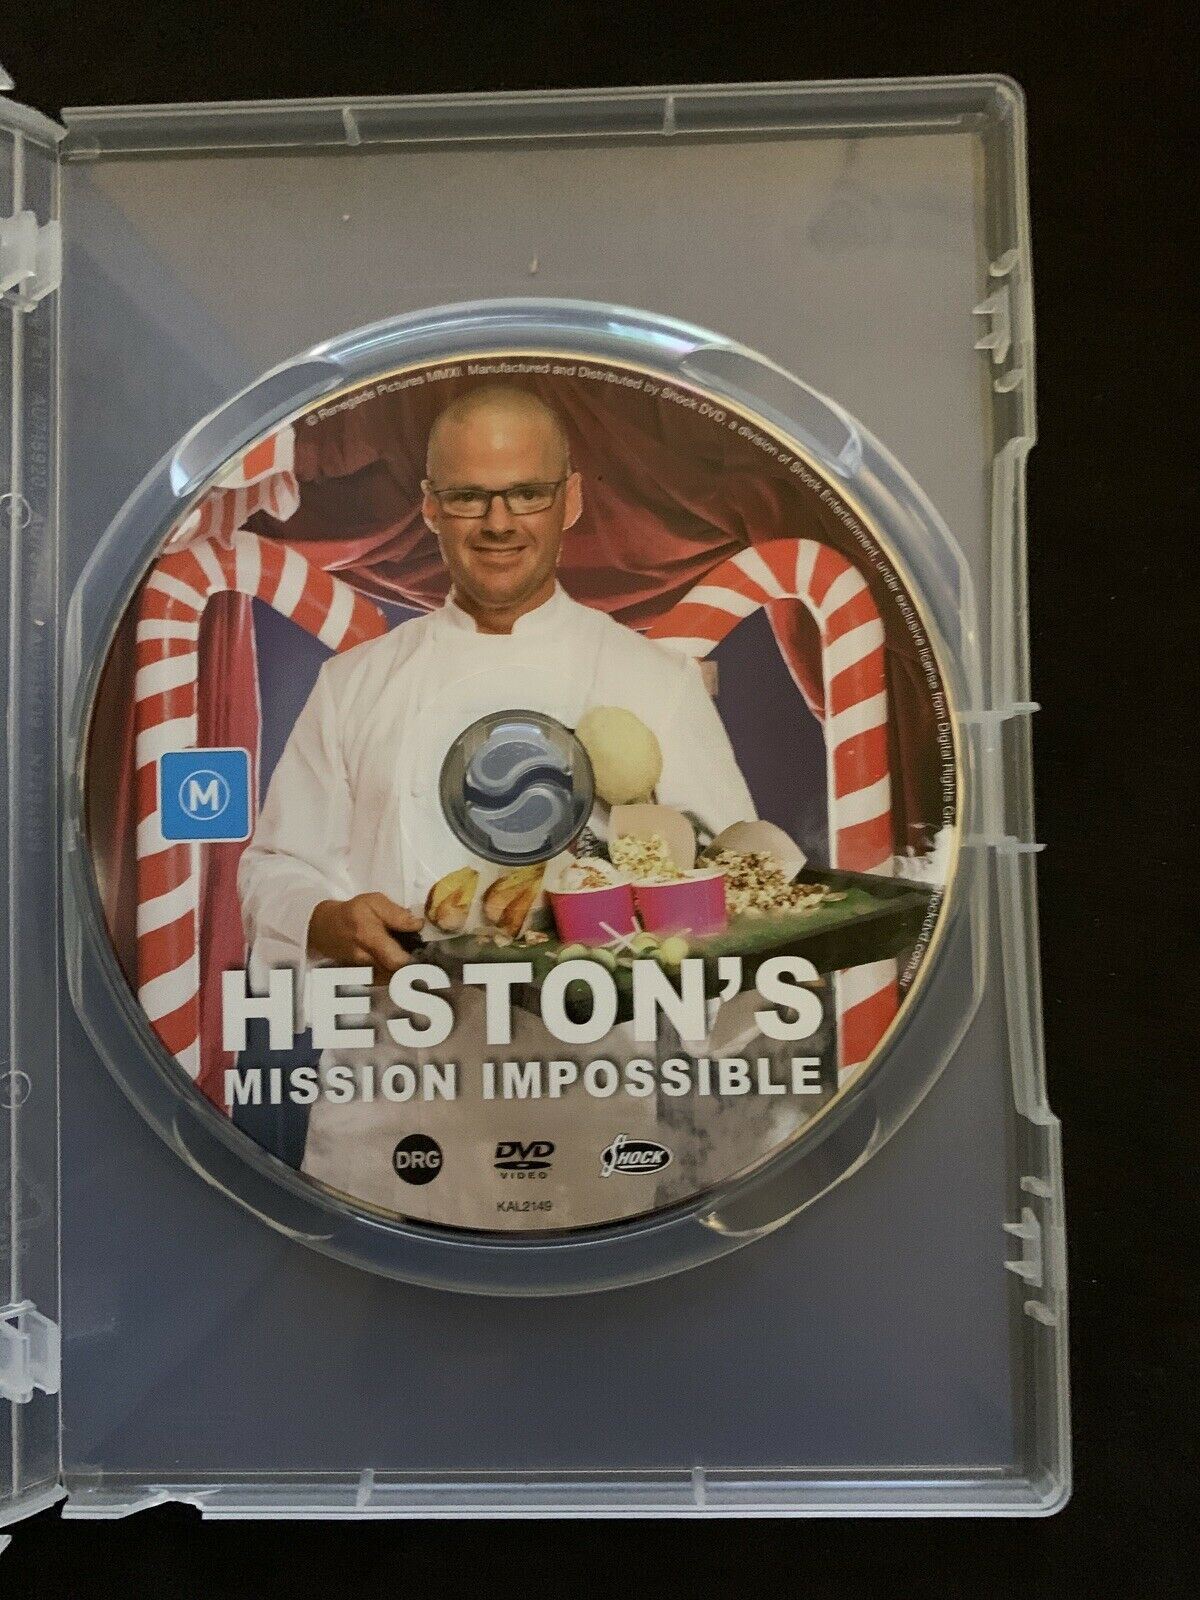 Heston's Mission Impossible (DVD, 2011) Heston Blumenthal. All Regions